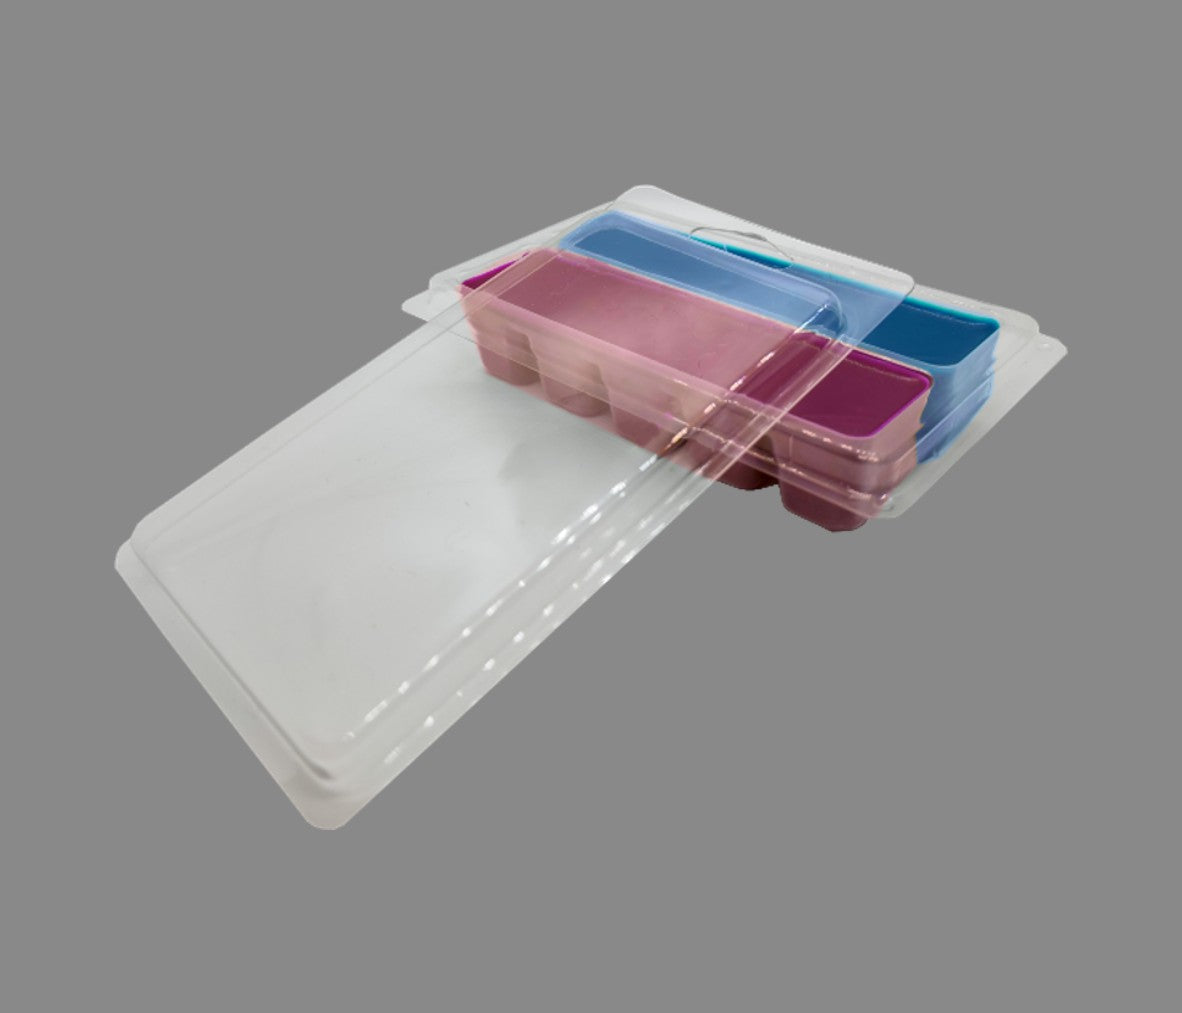 Livemoor Wax Melt Clamshells / Packaging Packs of 10 